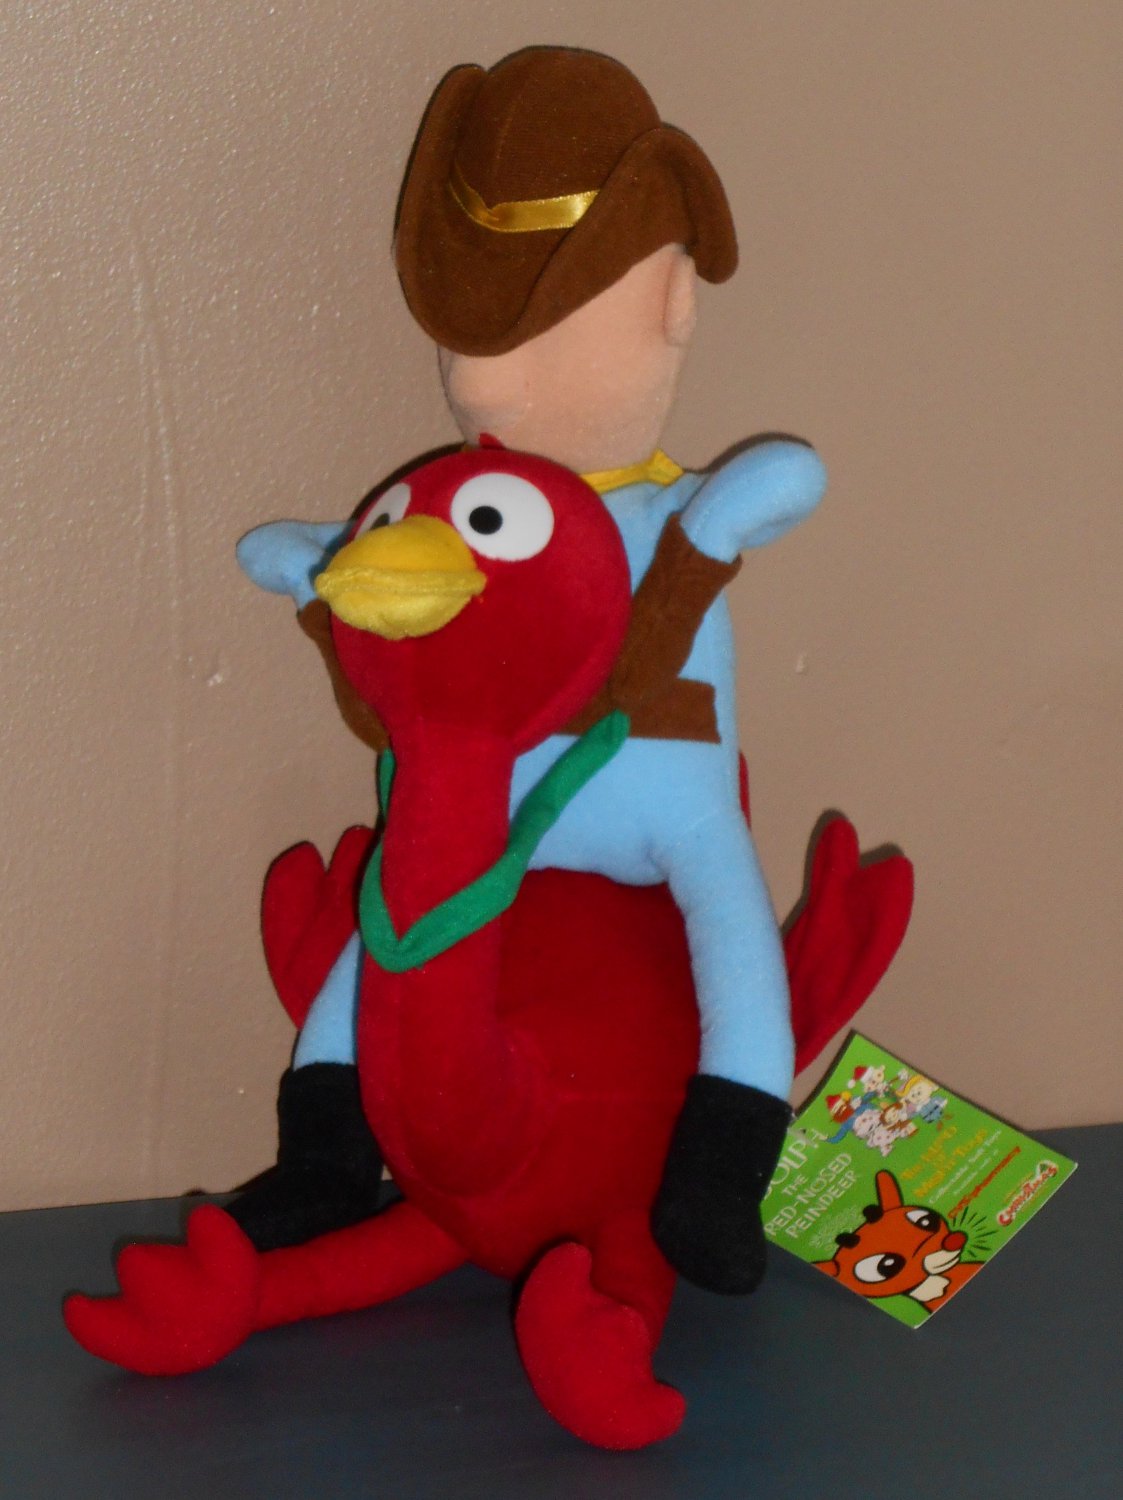 CVS Stuffins 1999 Misfit Cowboy Riding Ostrich 12 Inch Plush Bean Bag Rudolph Island Toys Stuffed